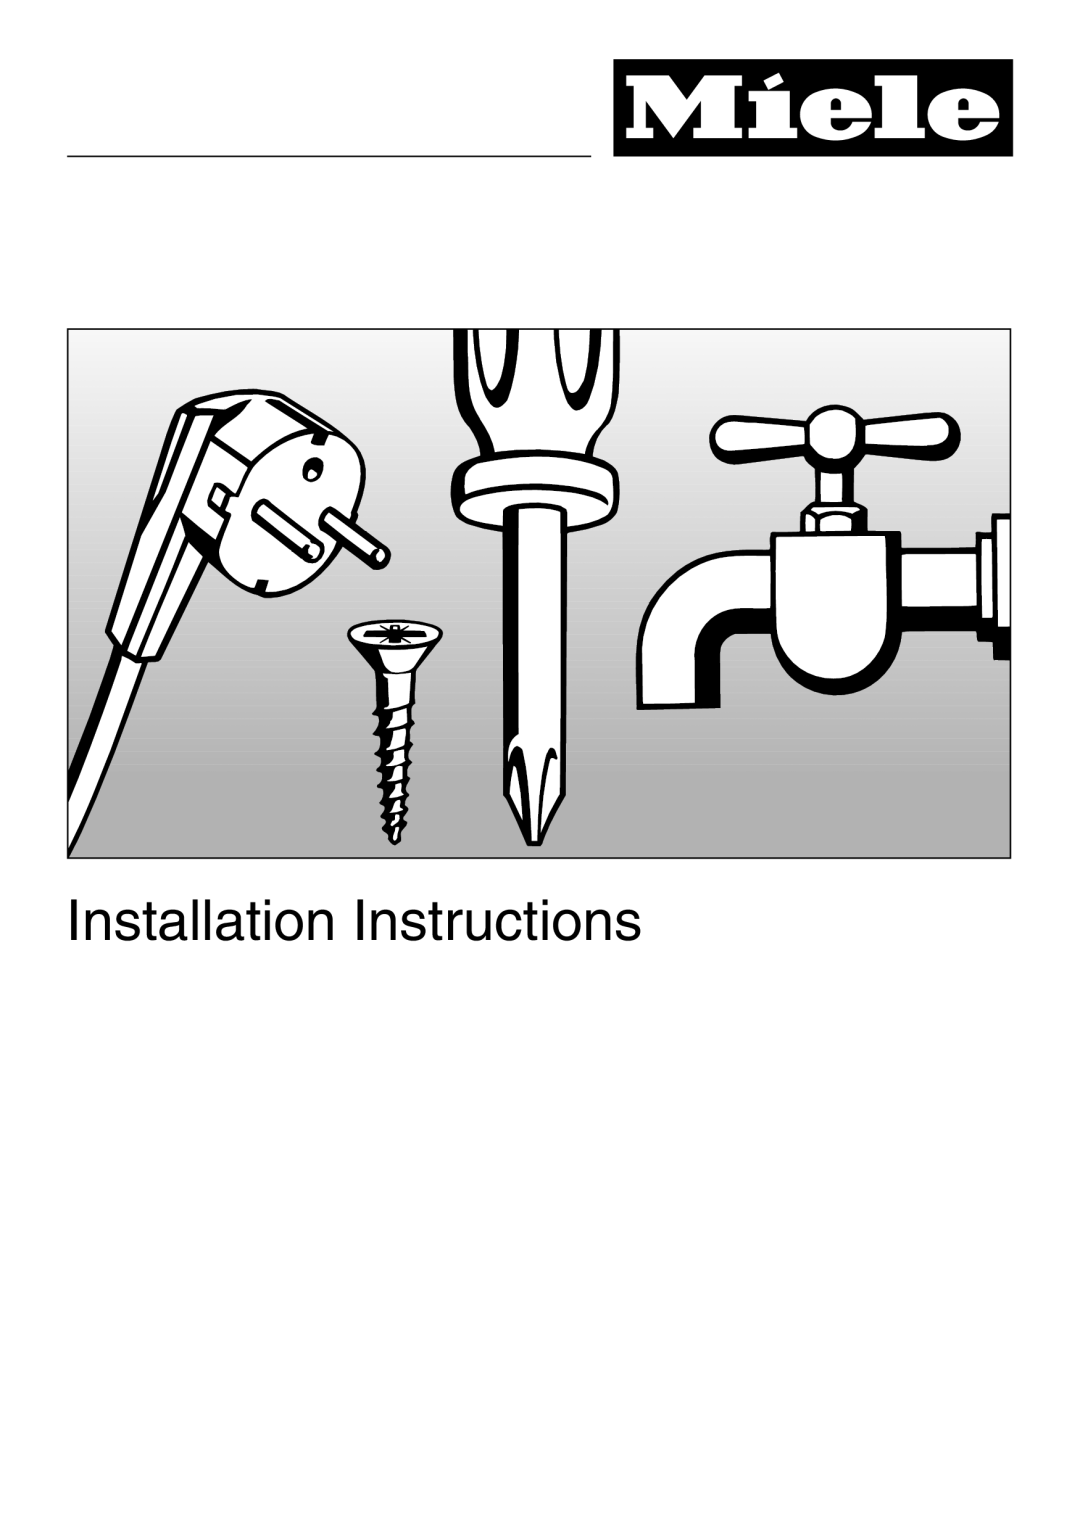 Miele DA 270-4 installation instructions Installation Instructions 